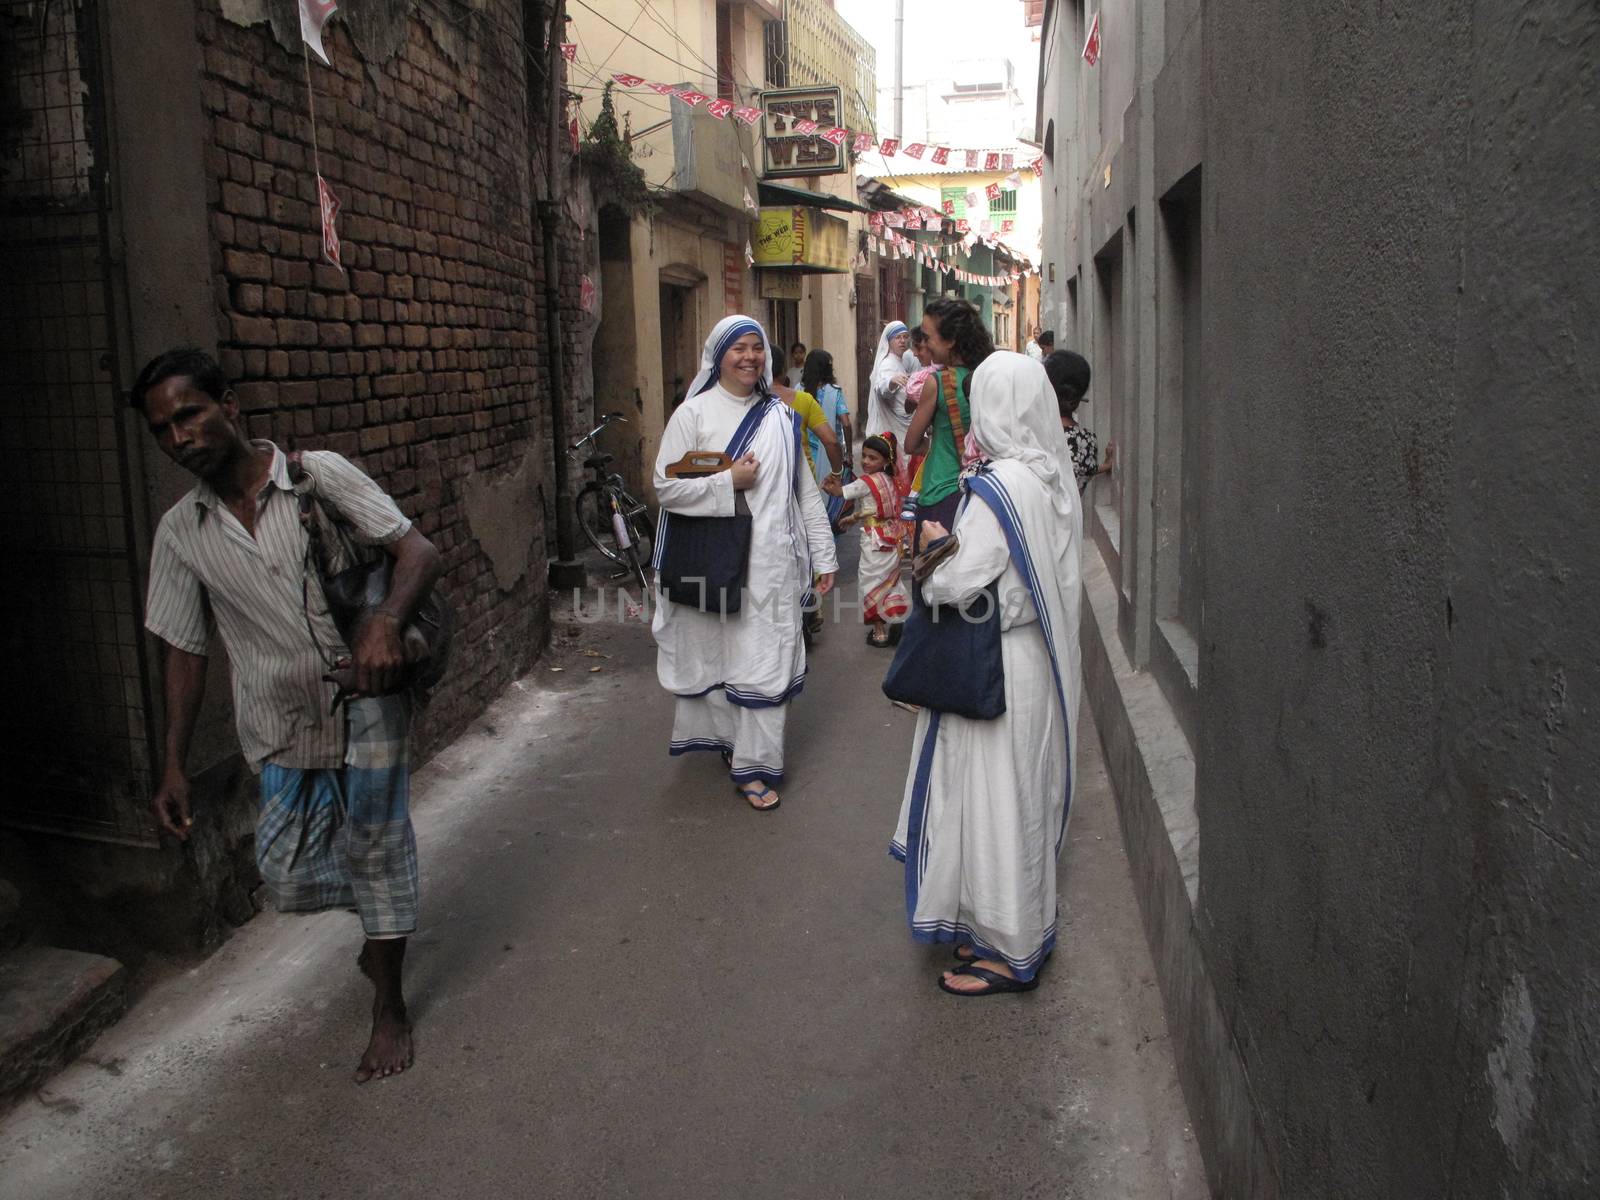 Sister of Missionaries of Charity at the streets of Kolkata, India by atlas